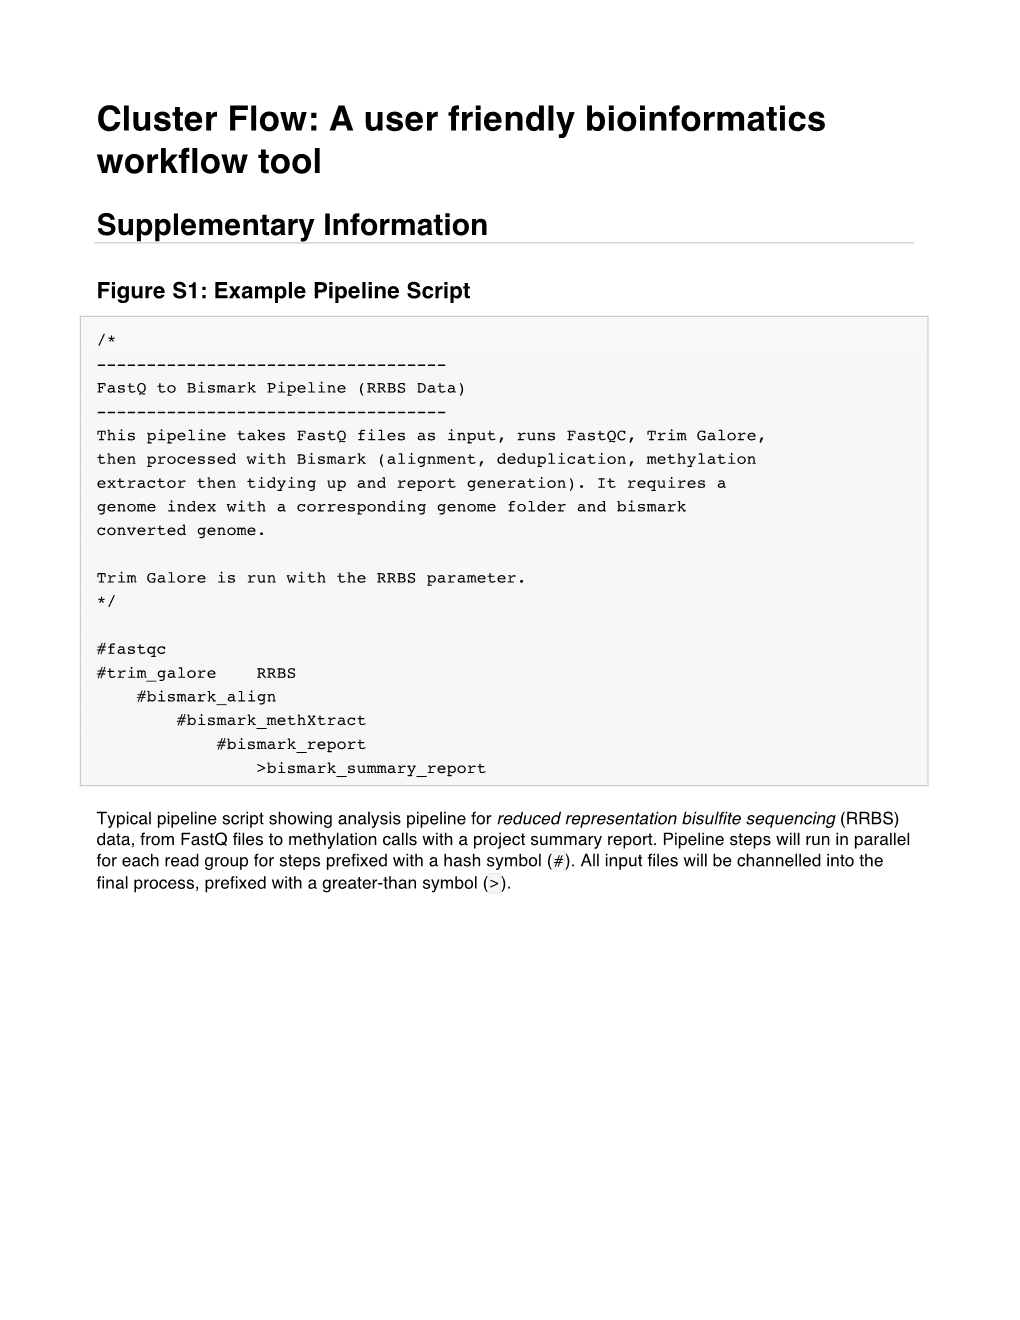 Cluster Flow: a User Friendly Bioinformatics Workflow Tool